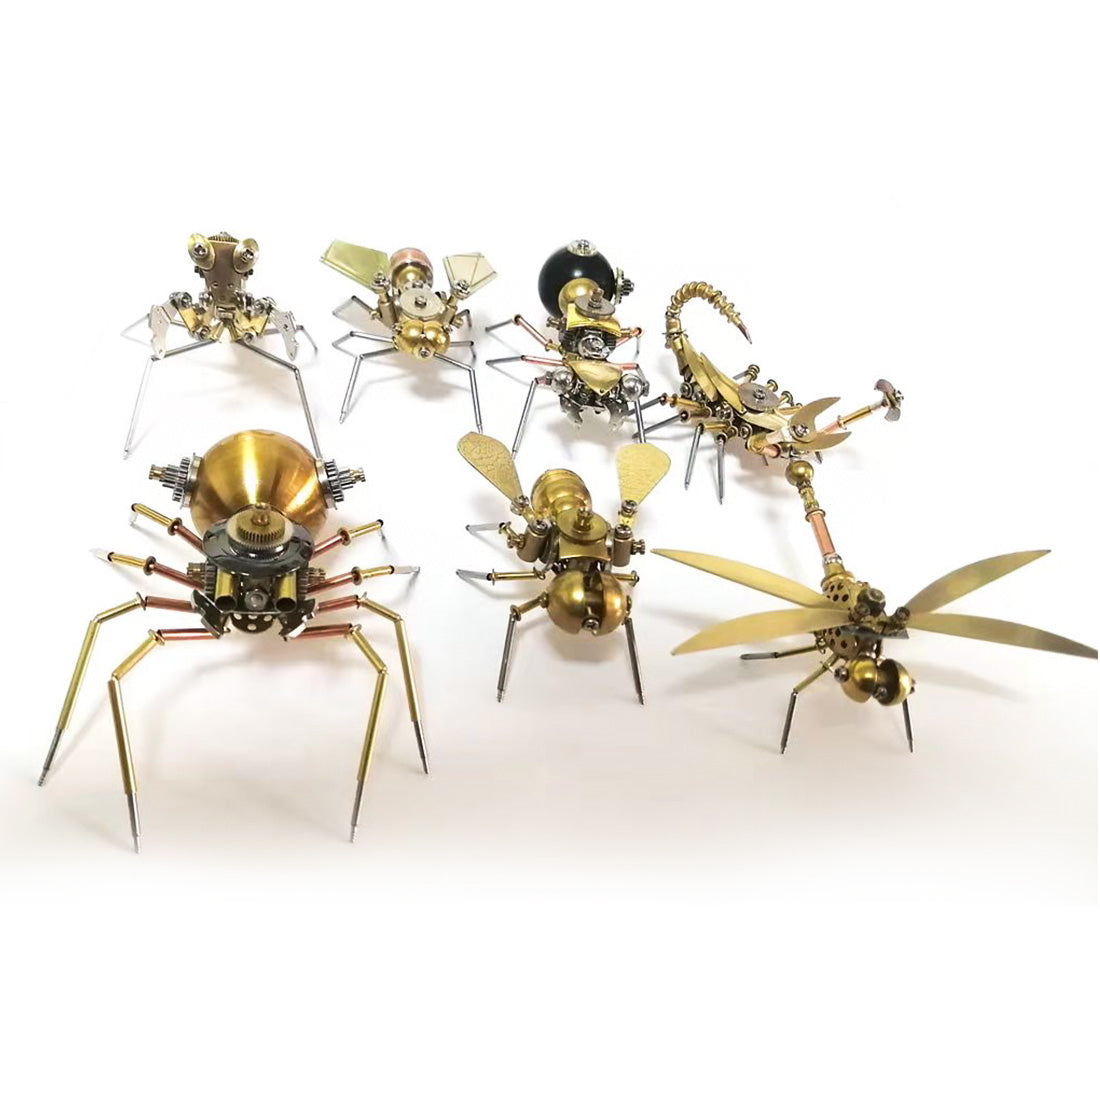 7pcs/Set Assembled Steampunk Insect Set Models with Box